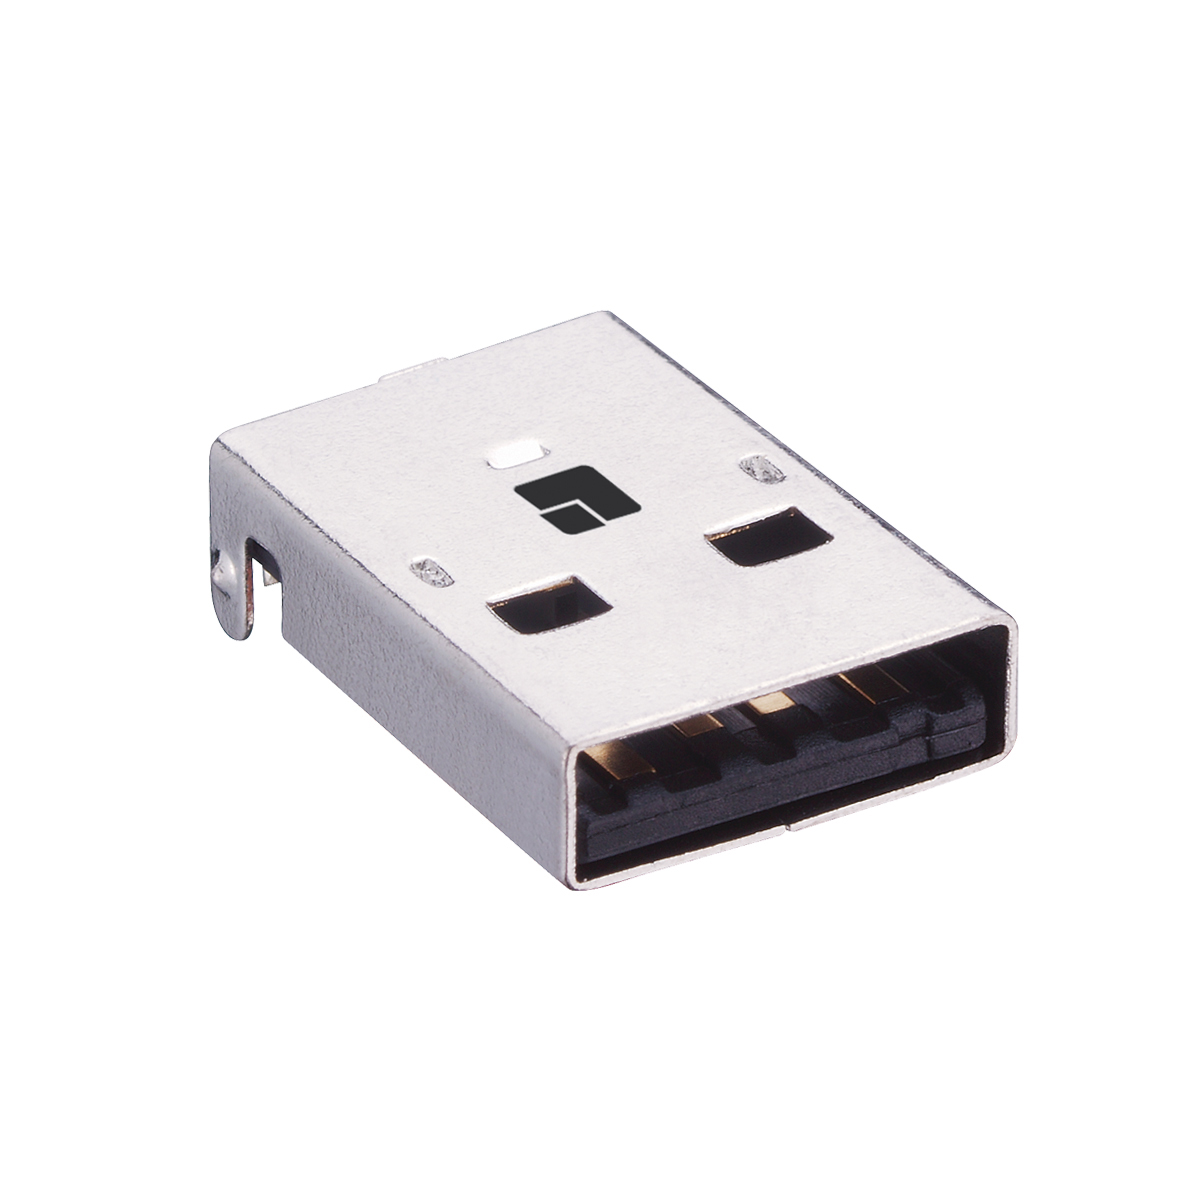 Lumberg: 2410 08 (Series 24 | USB and IEEE 1394 connectors)